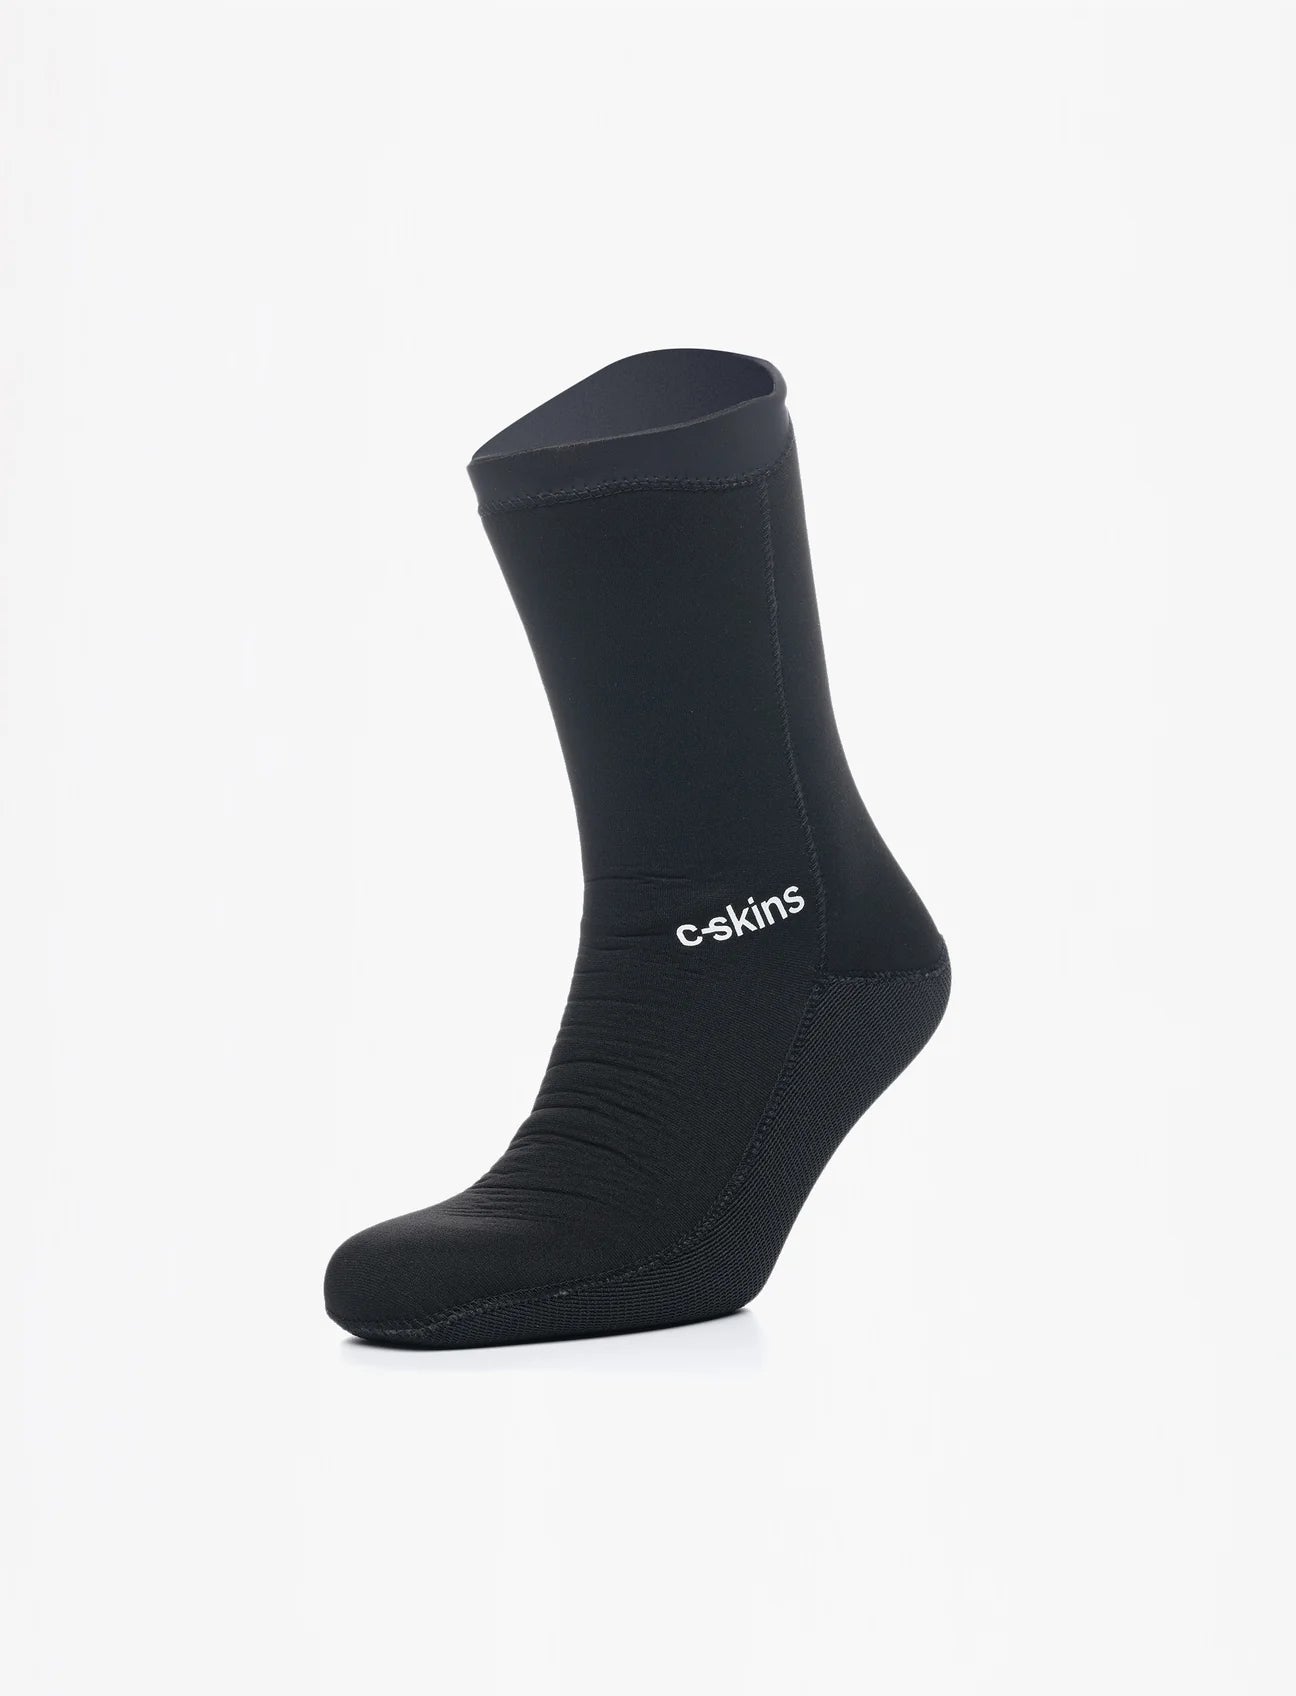 Swim Research Freedom 4mm Swim Socks - Black